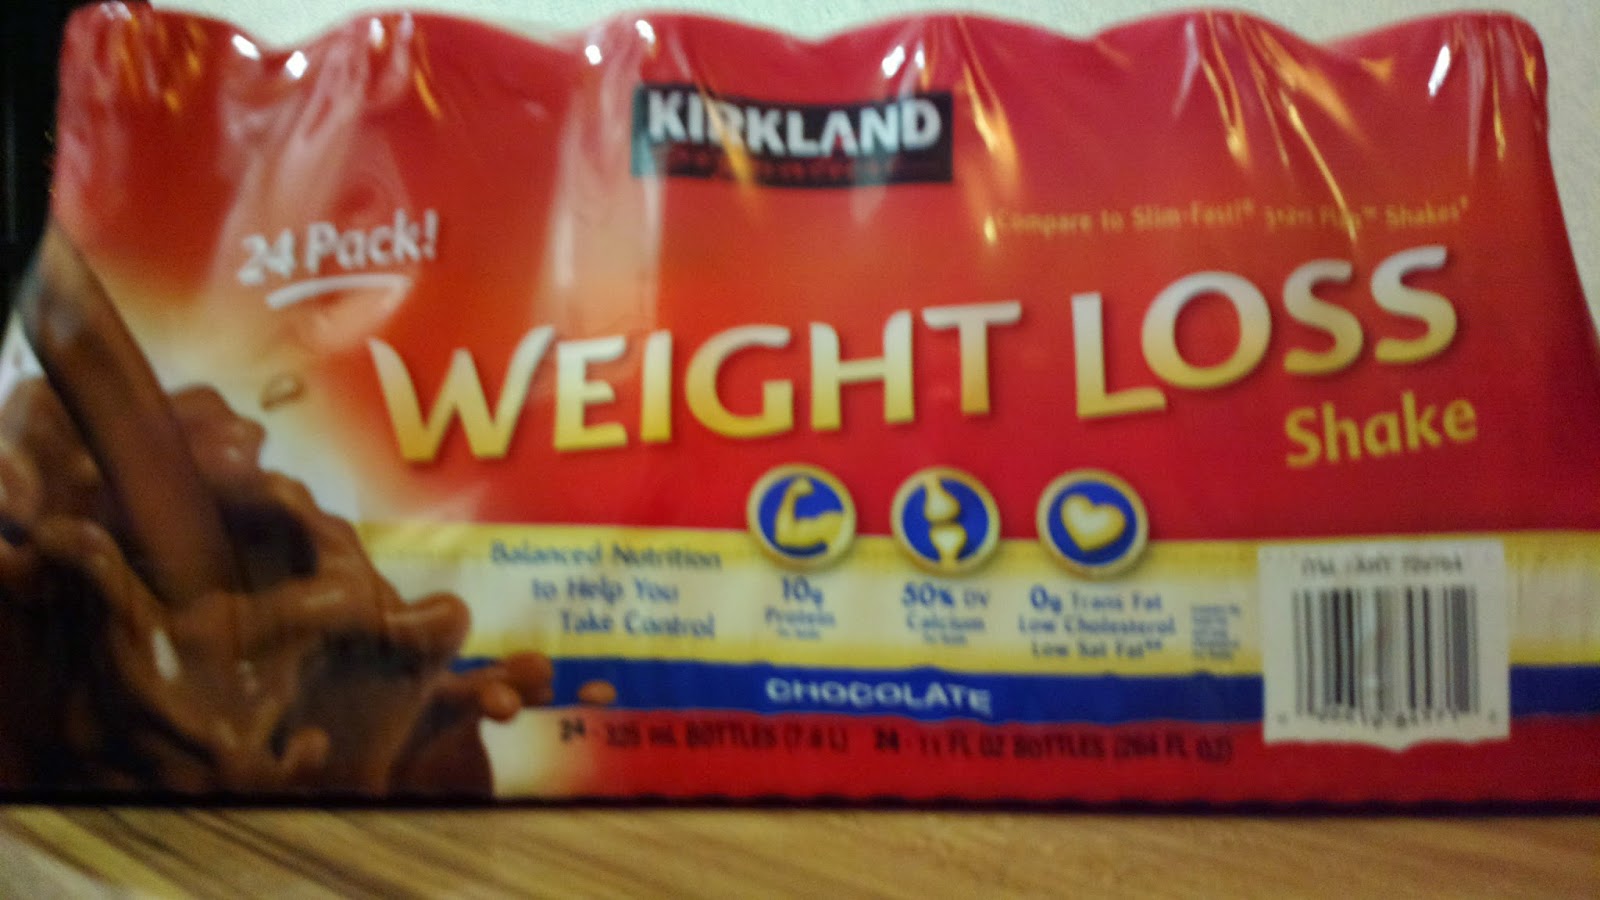 How does Kirkland Weight Loss work?